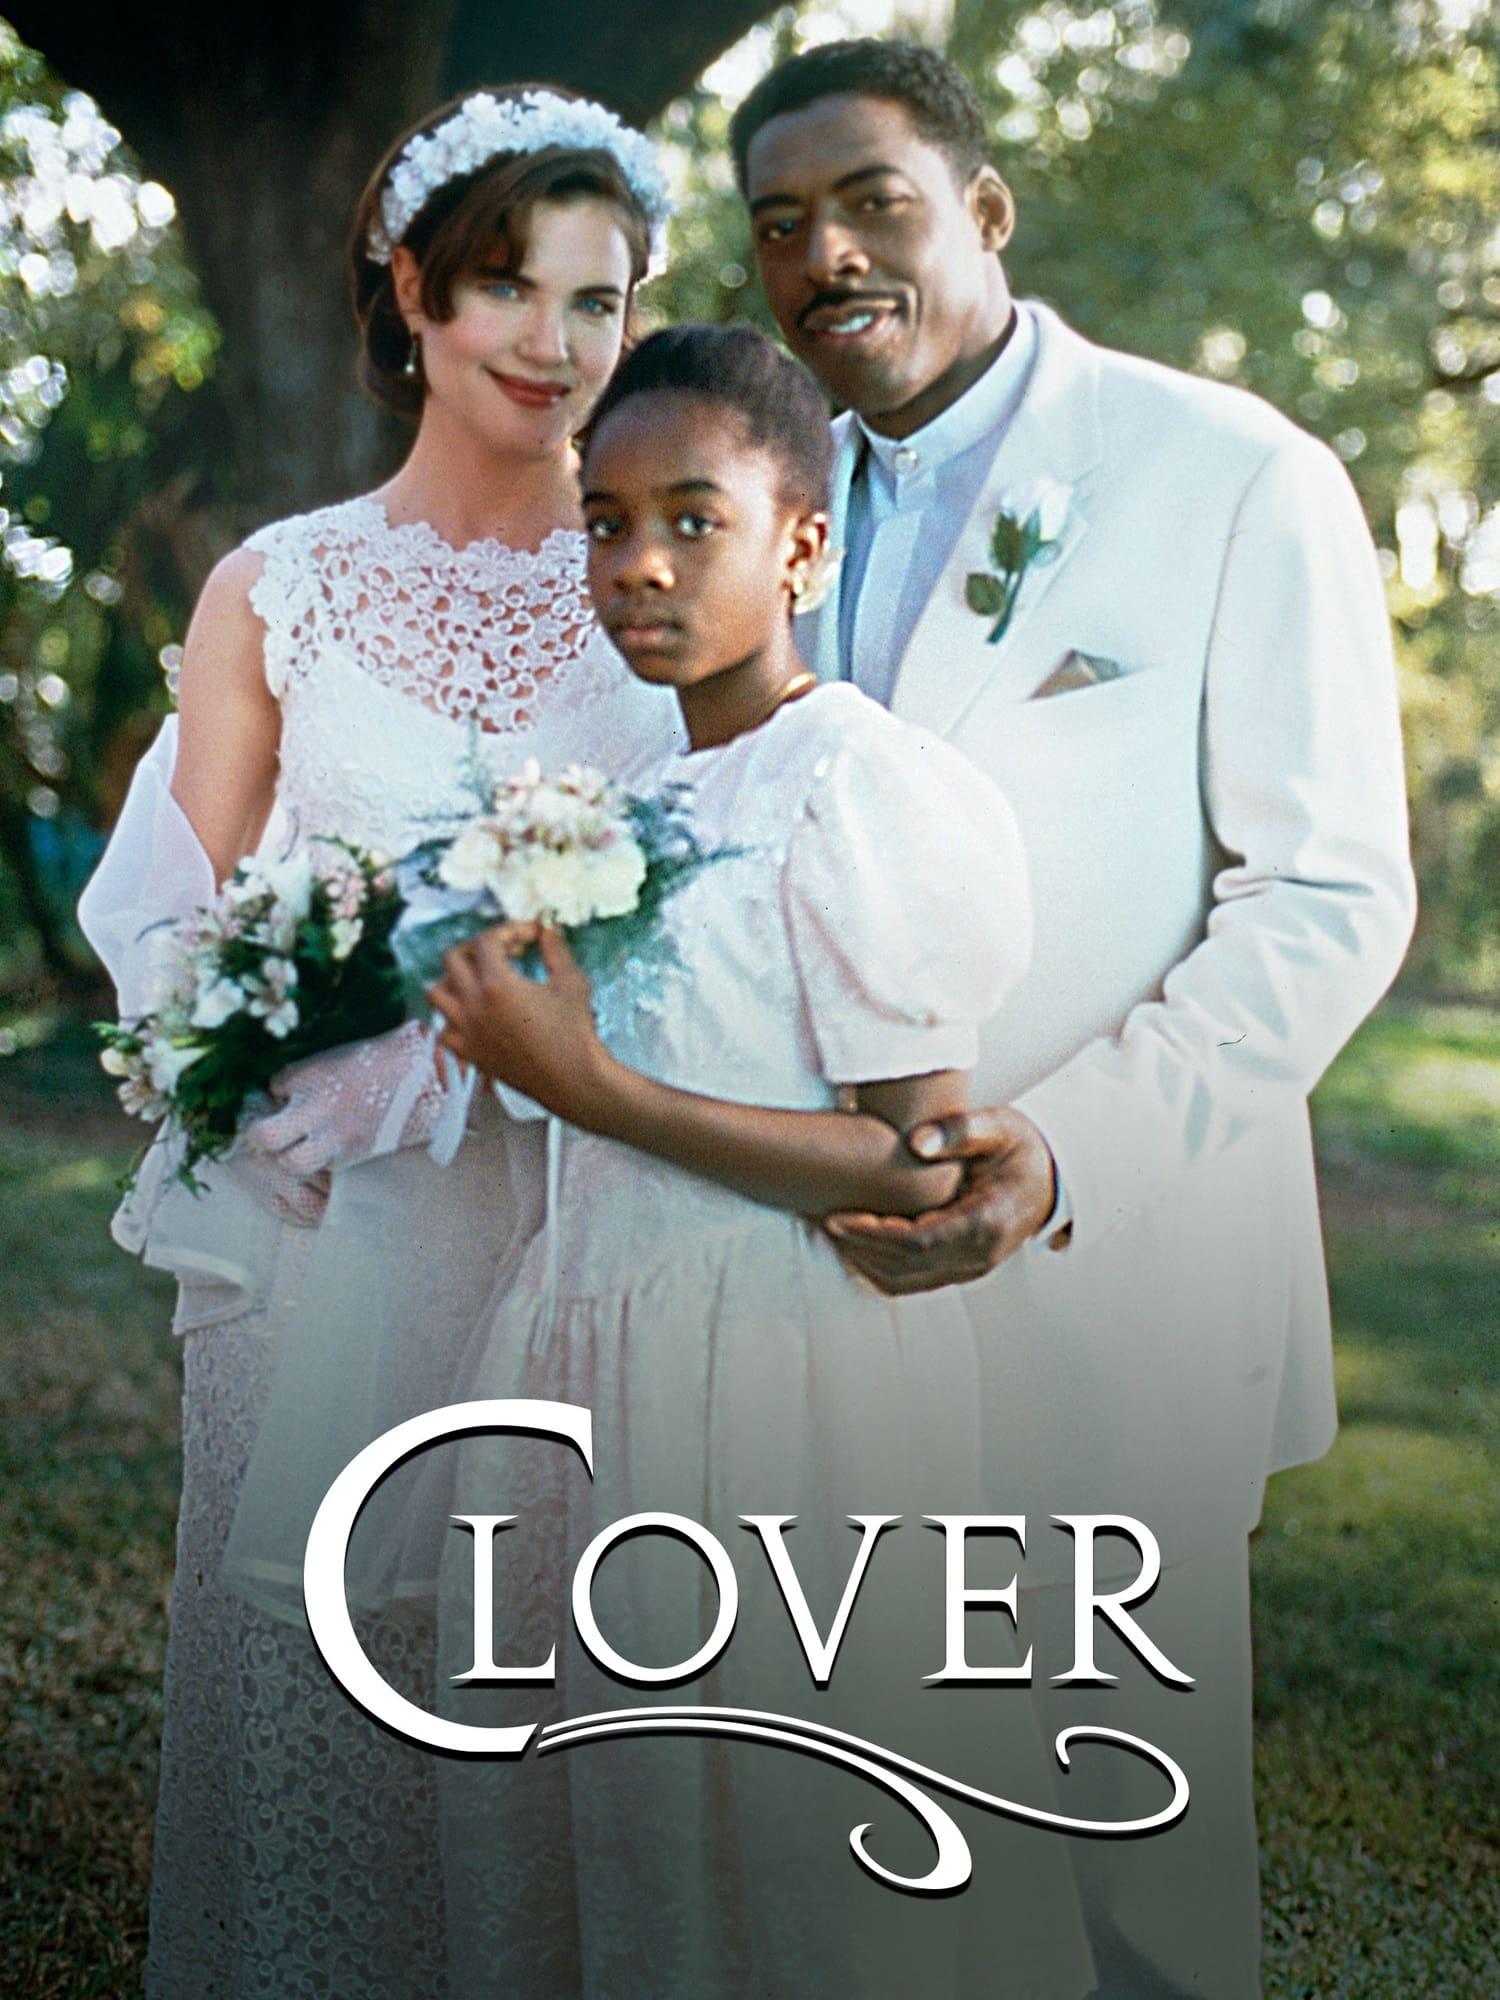 Clover poster